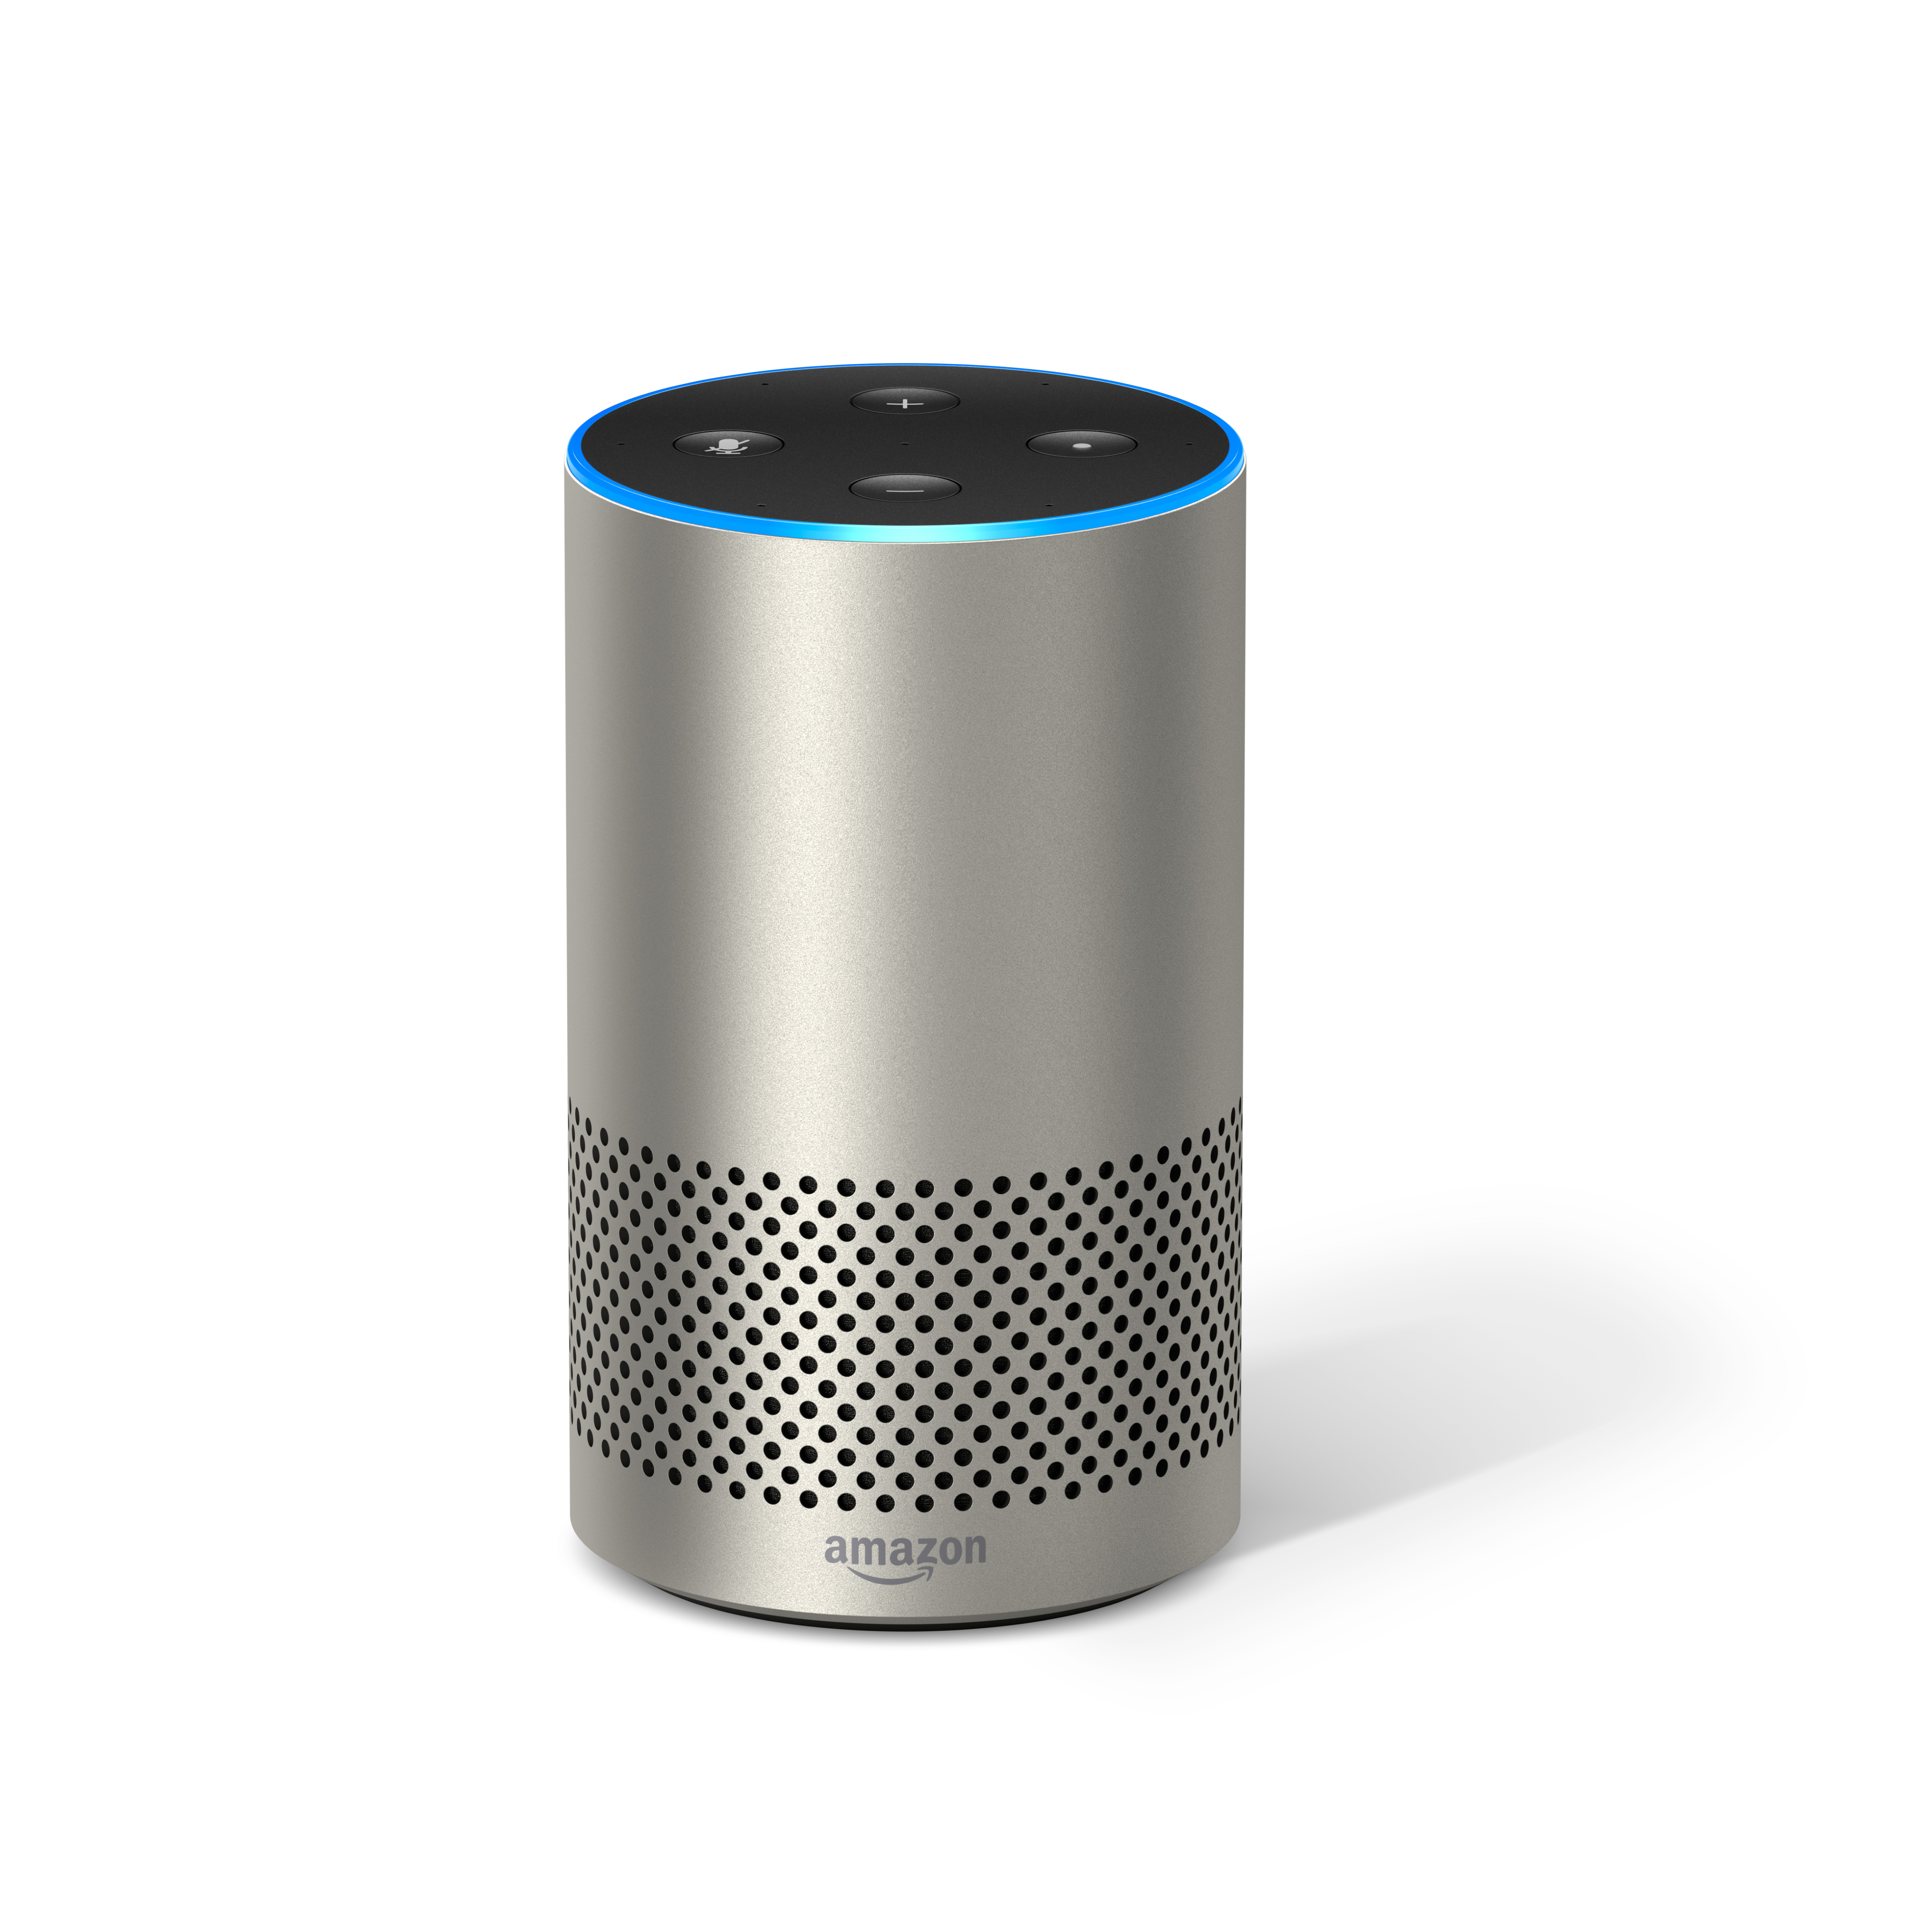 Image shows an amazon Alexa smart speaker